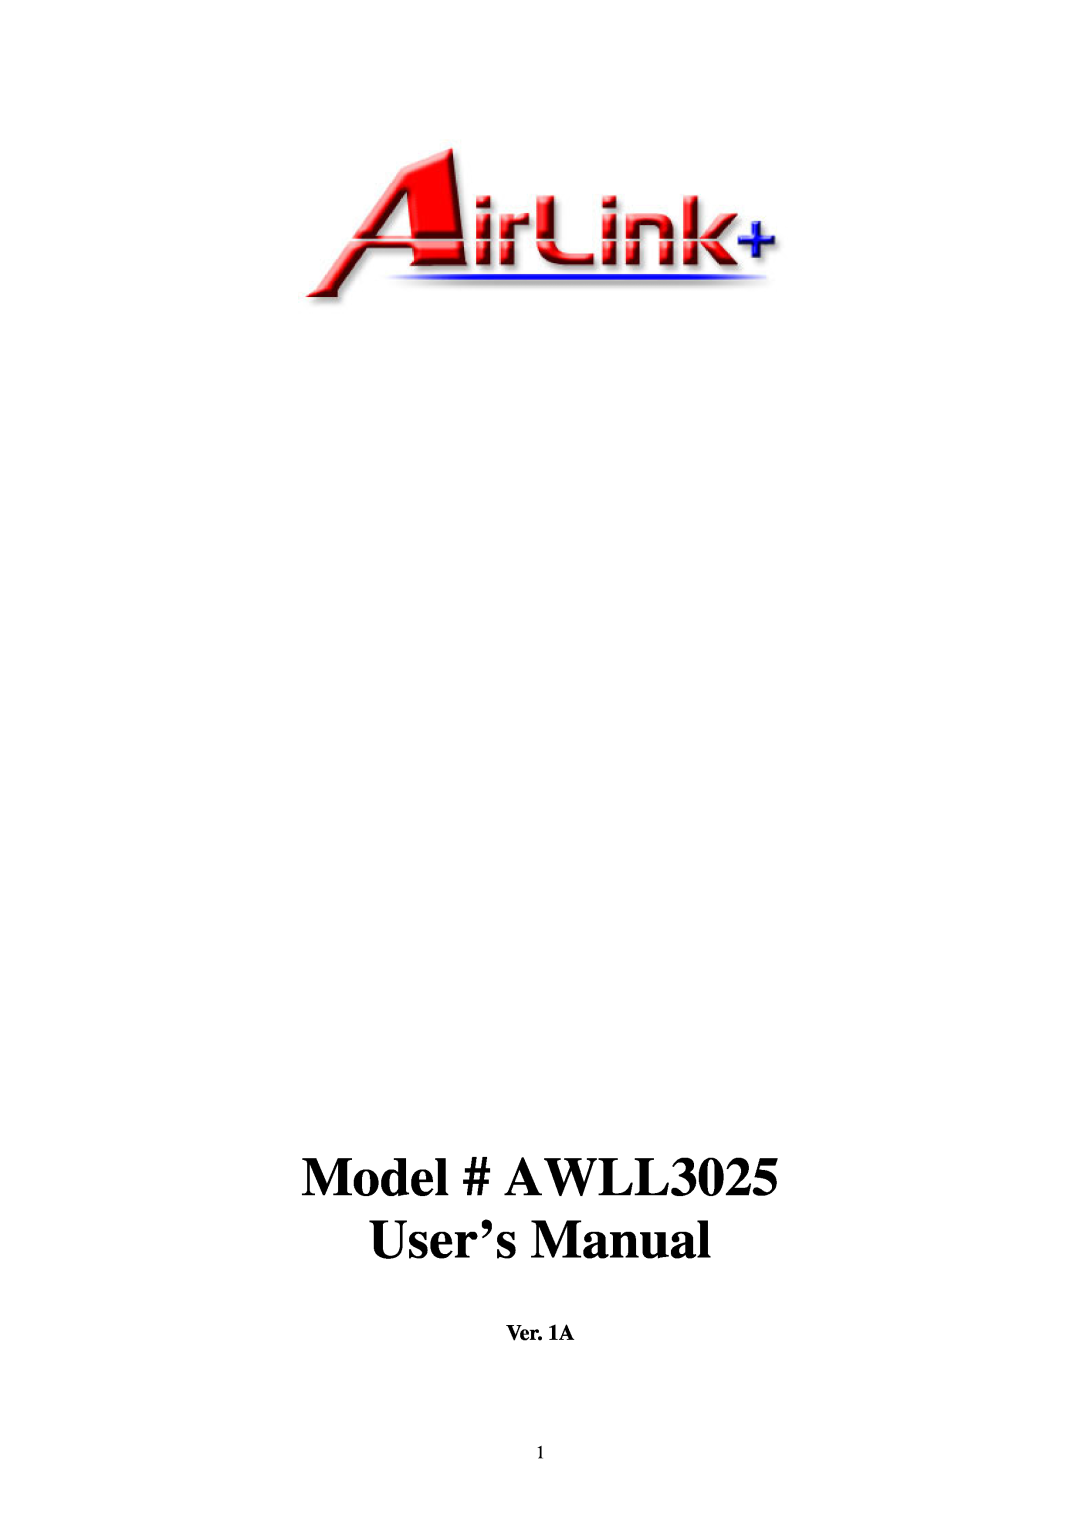 Airlink user manual Model # AWLL3025 User’s Manual, Ver. 1A 